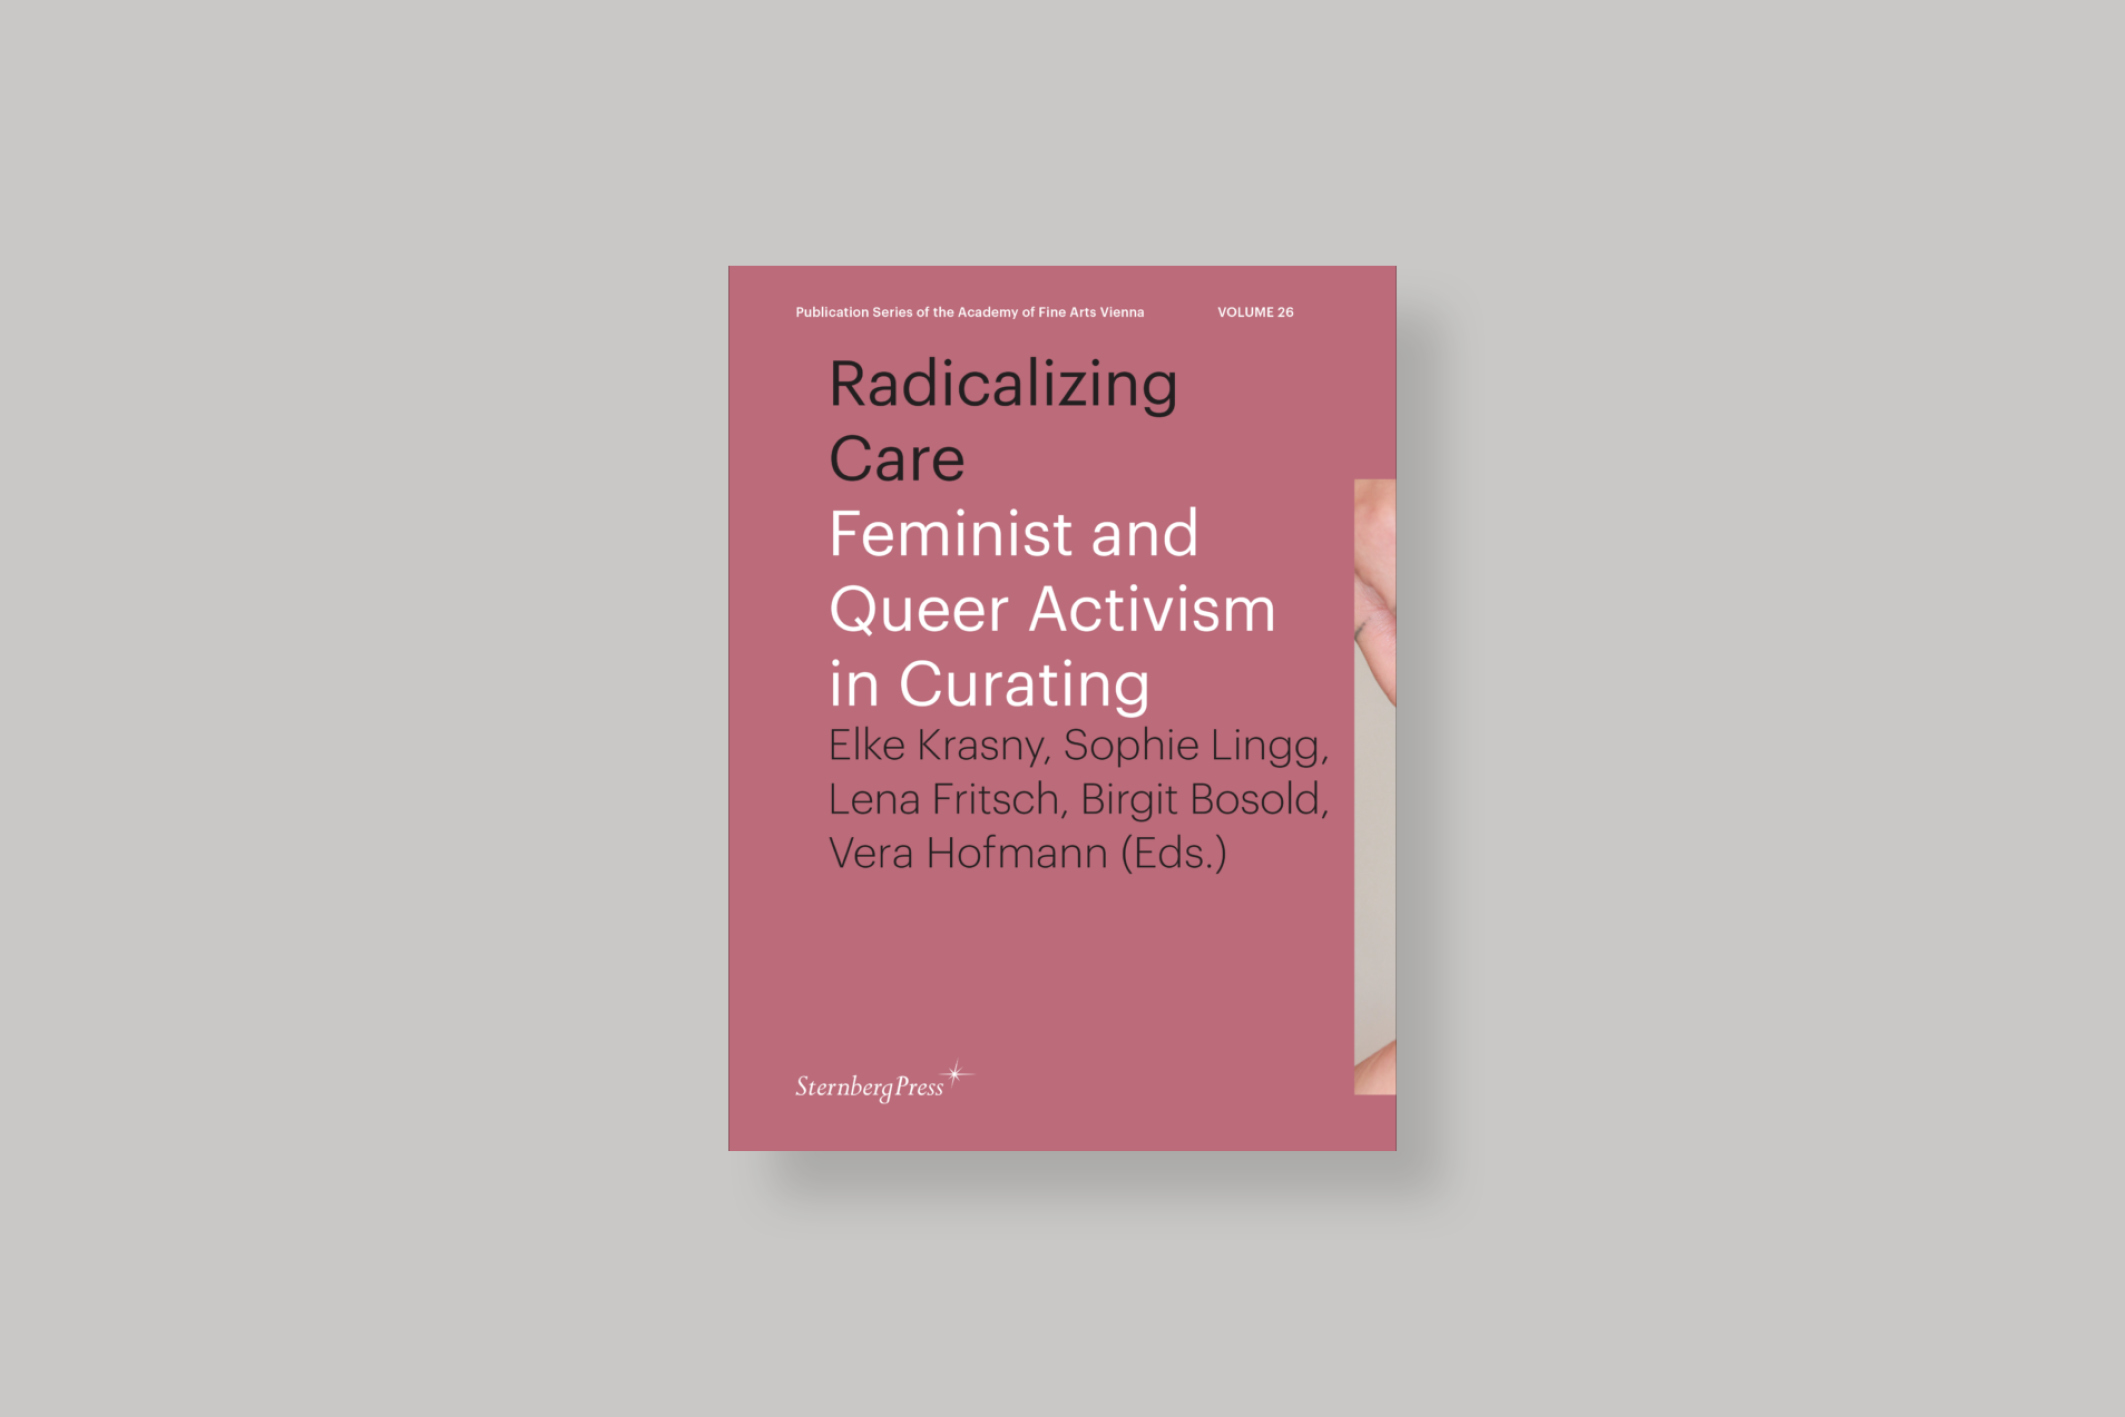 Radicalizing-care-feminist-queer-activism-sternberg-press-cover